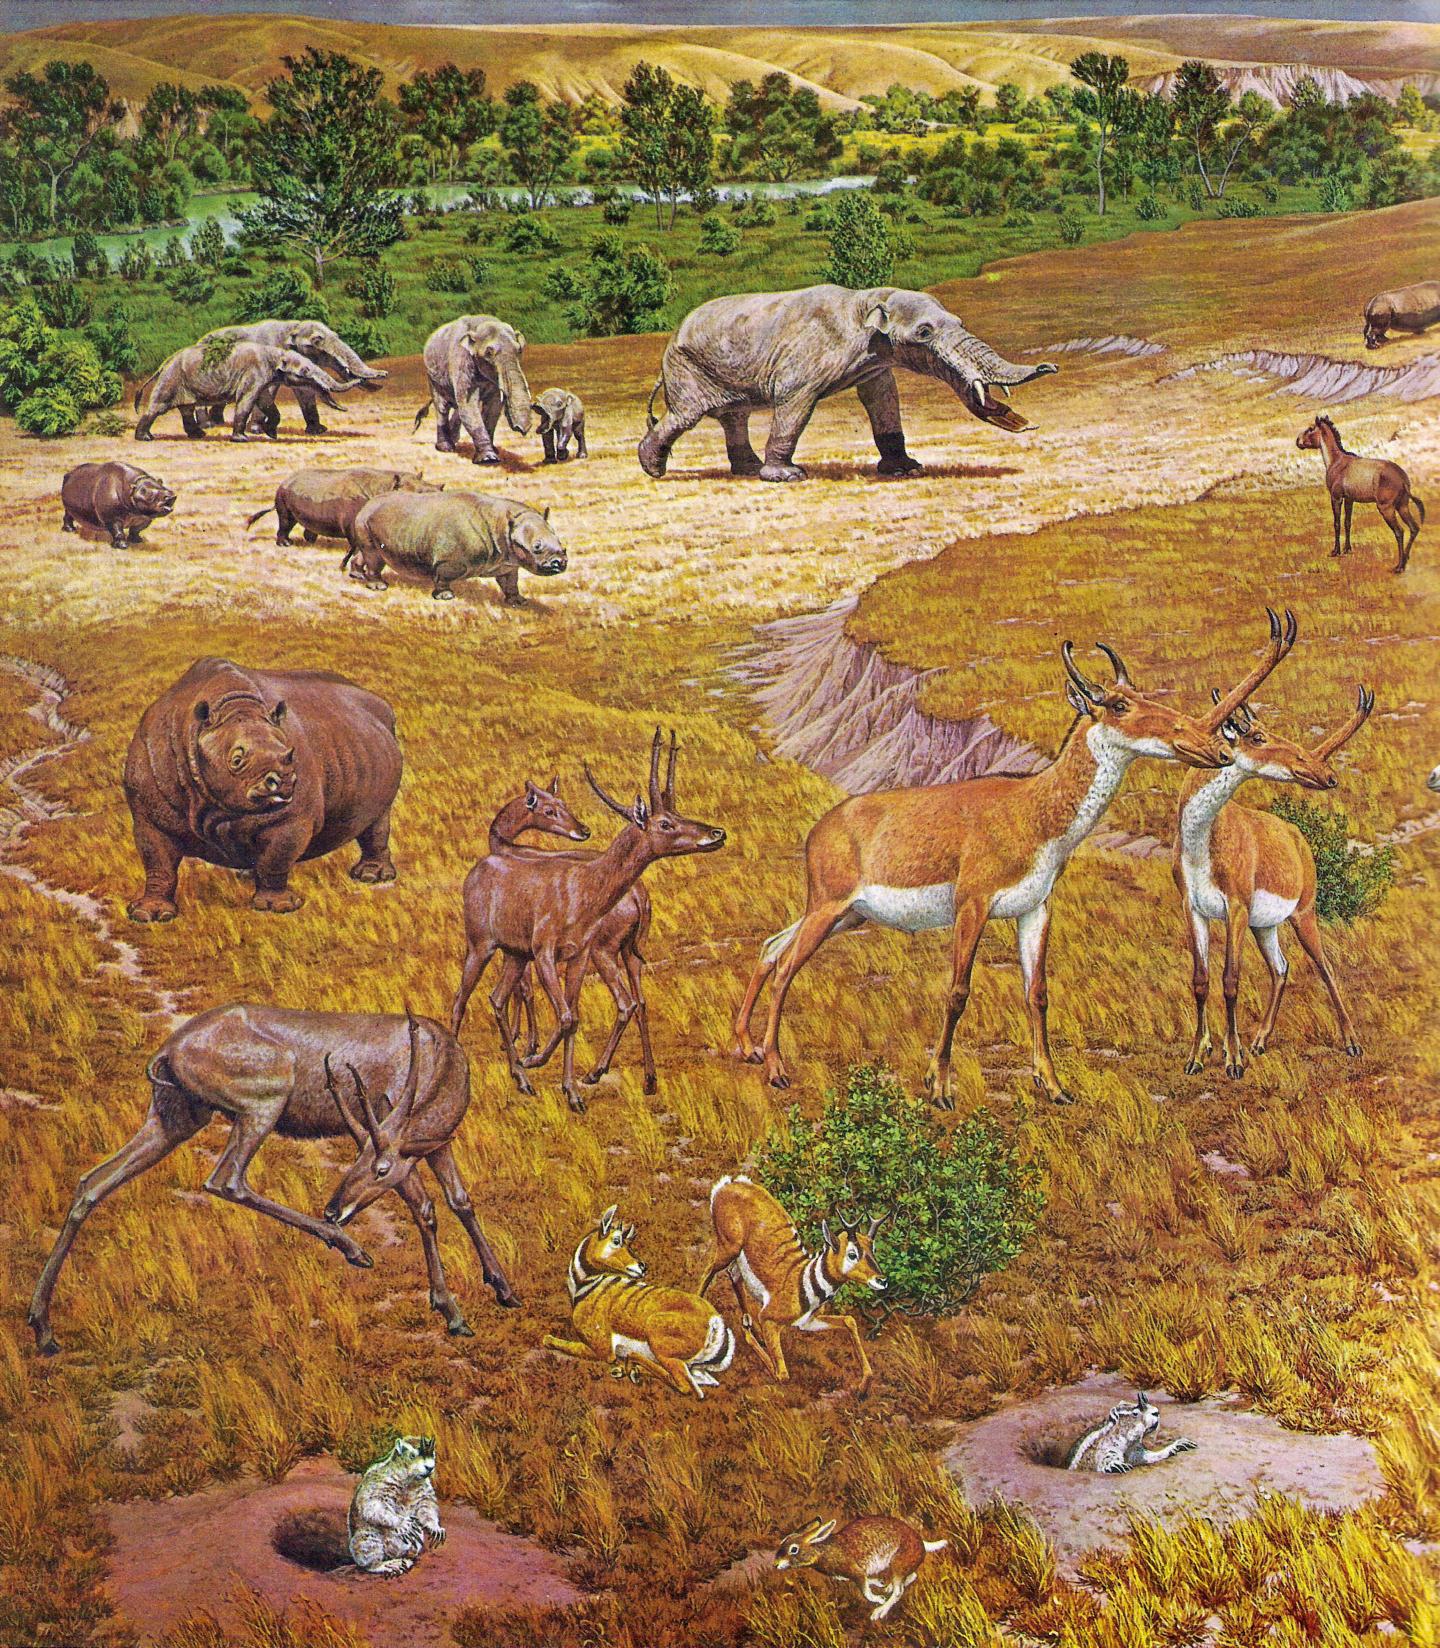 Artist's Interpretation of North American Fauna